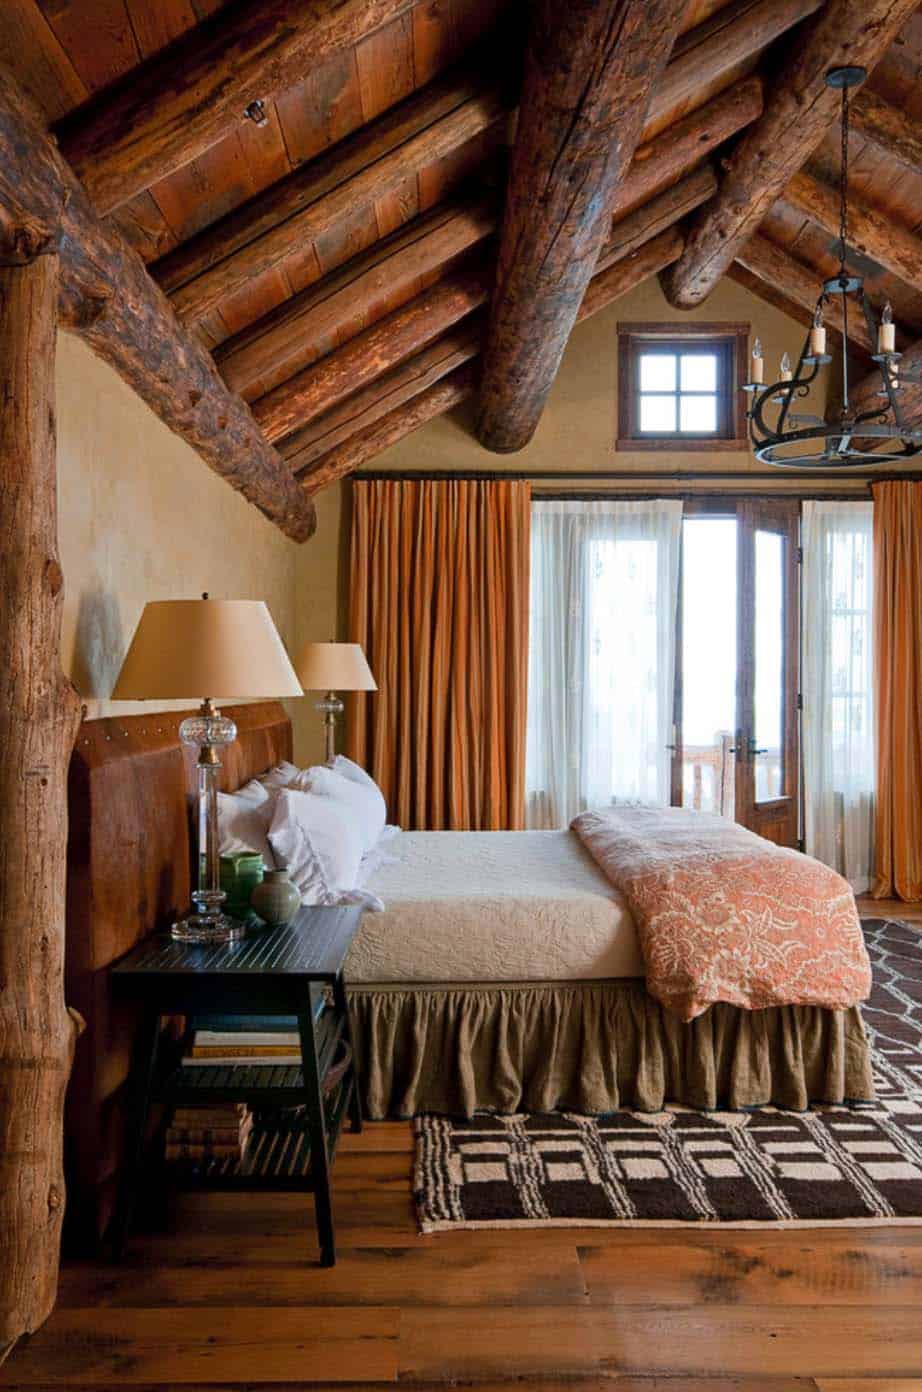 Log Bedframe In Cabin Bedroom Decor